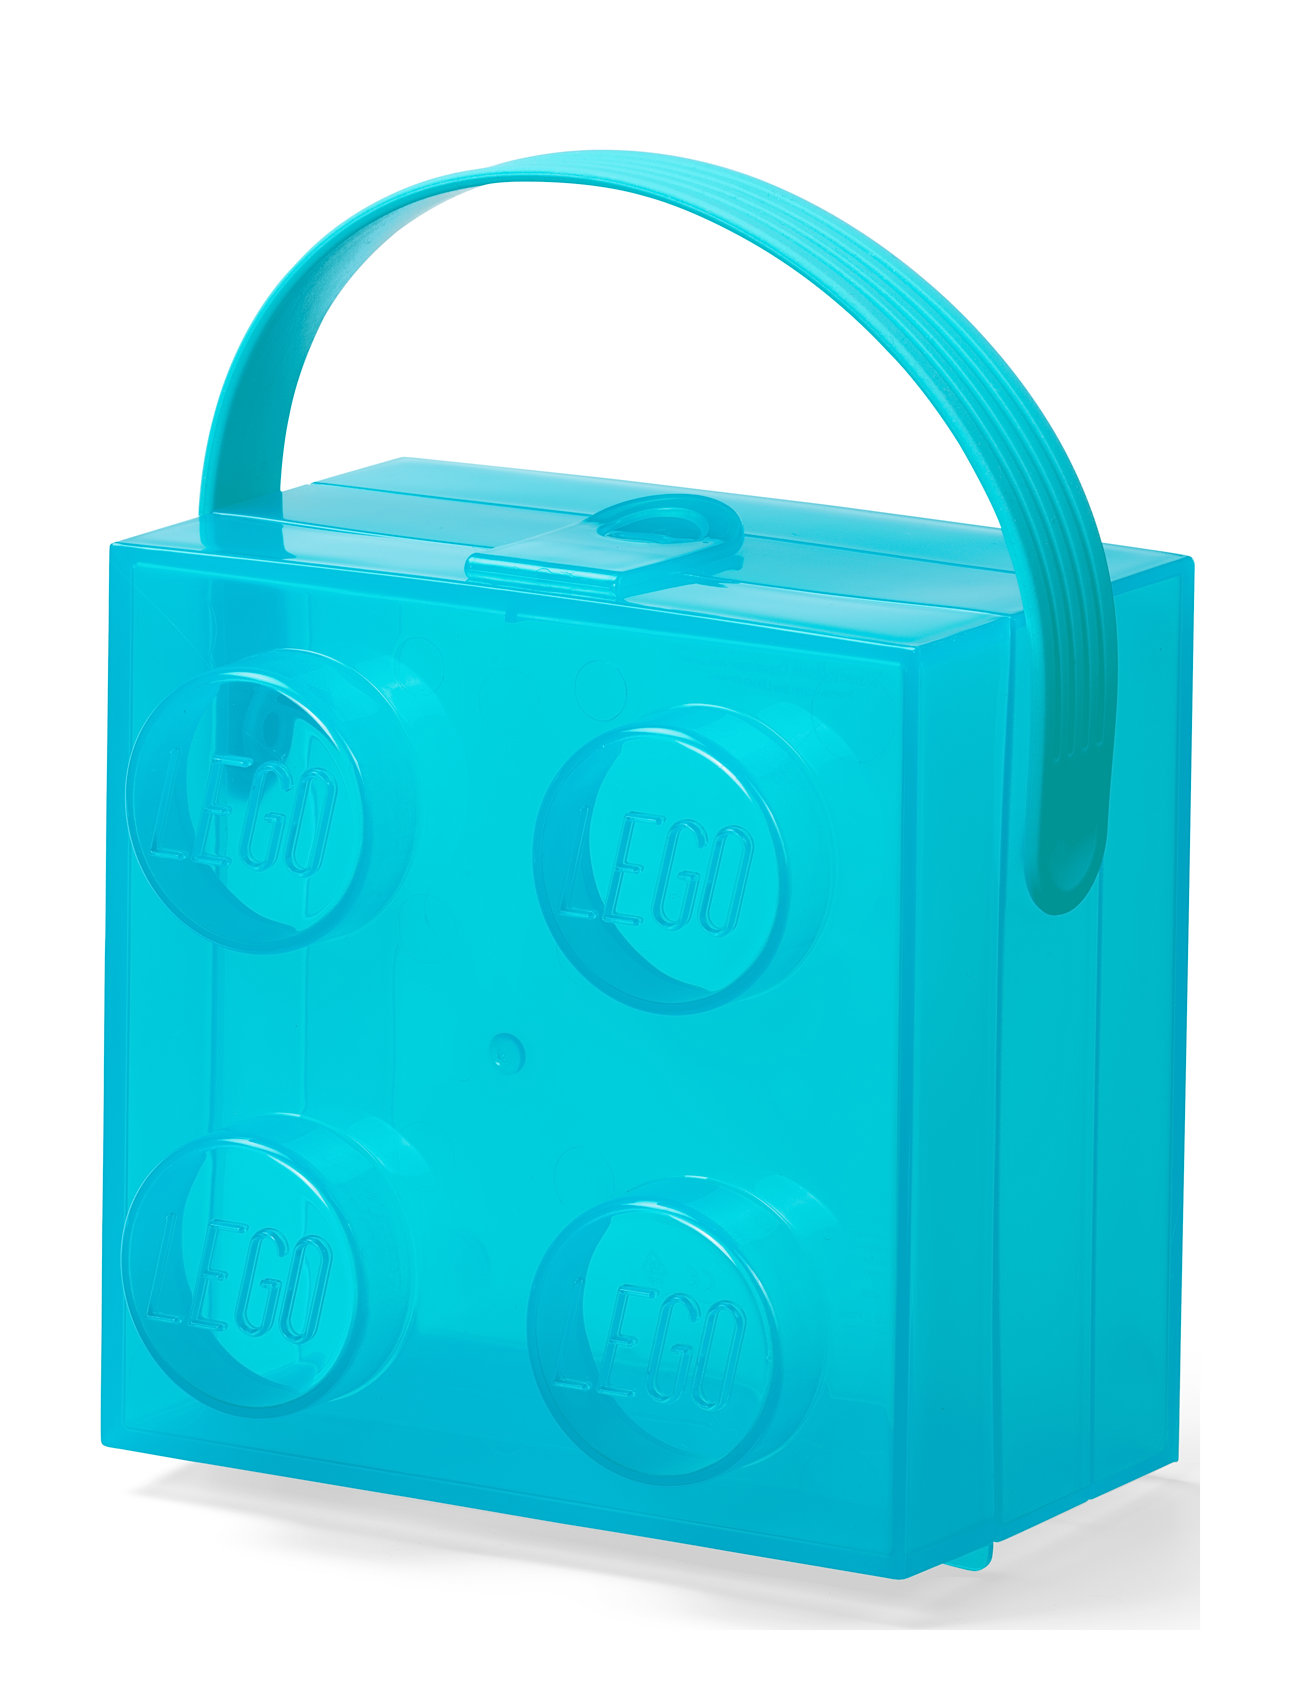 Lego Box W. Handle Translucent Light Blue Home Kids Decor Storage Storage Boxes Blue LEGO STORAGE